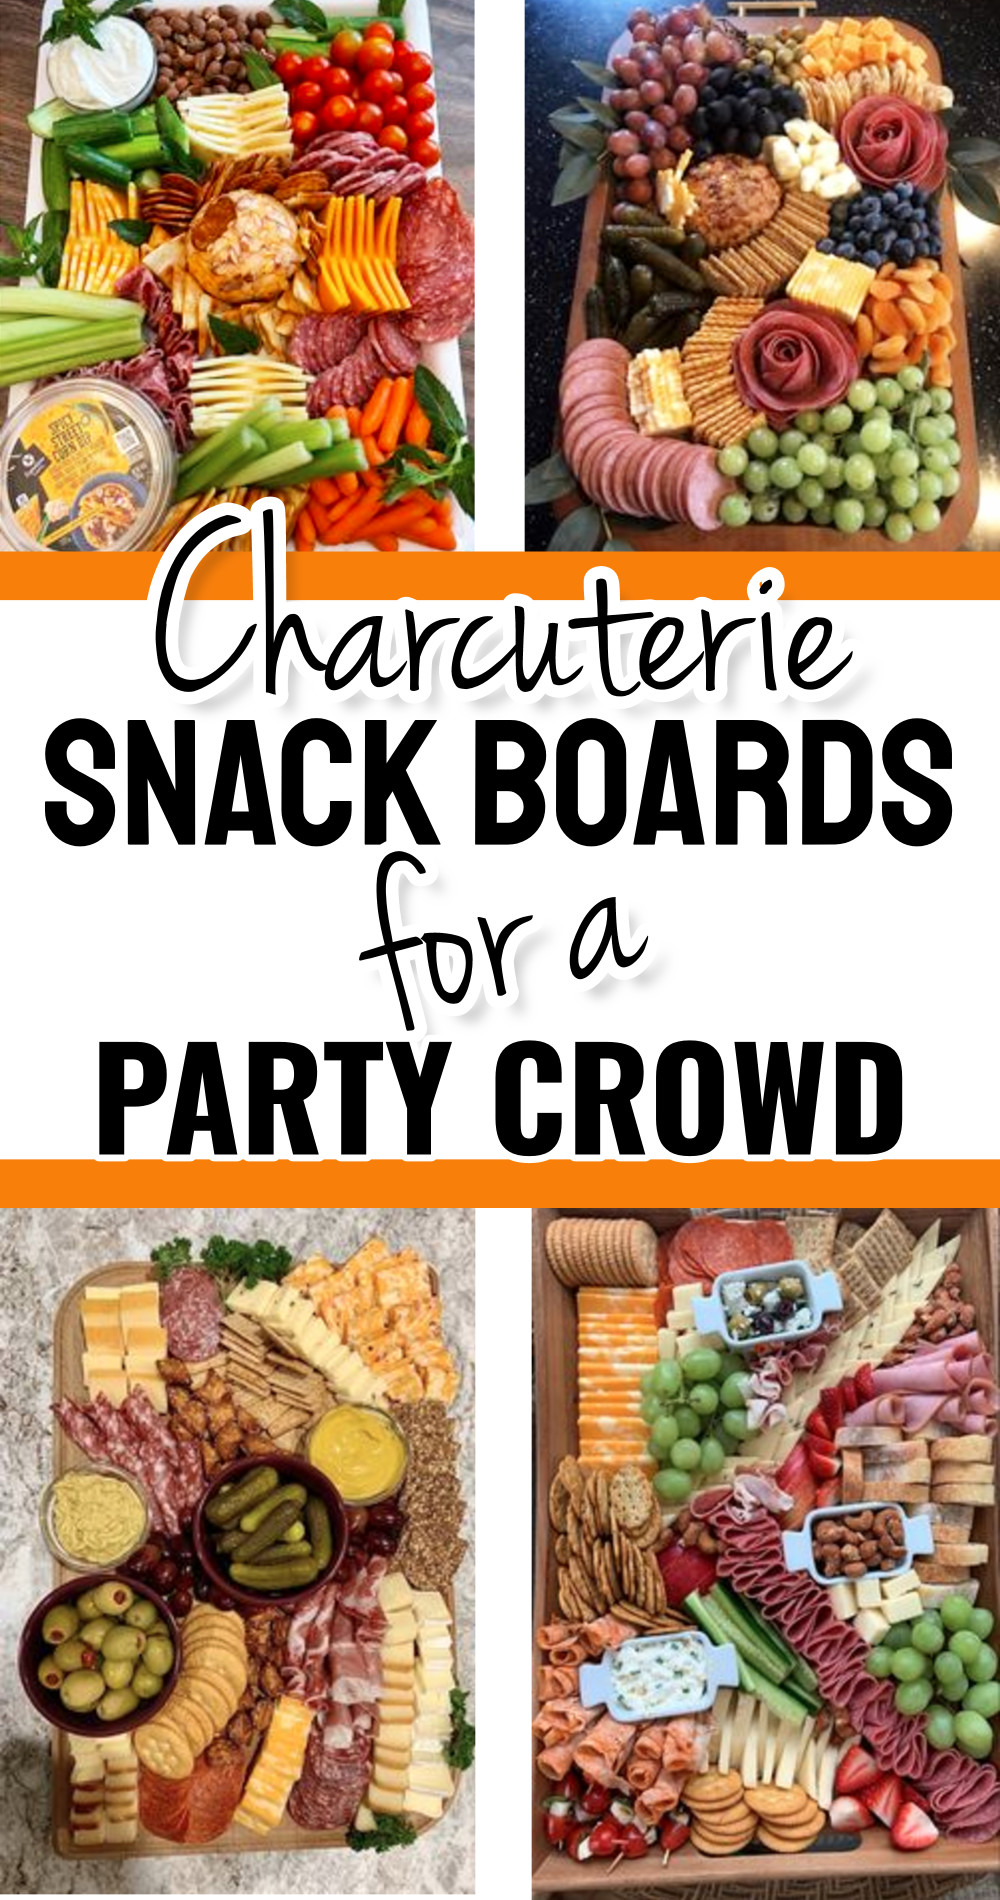 4 Charcuterie Snack Boards